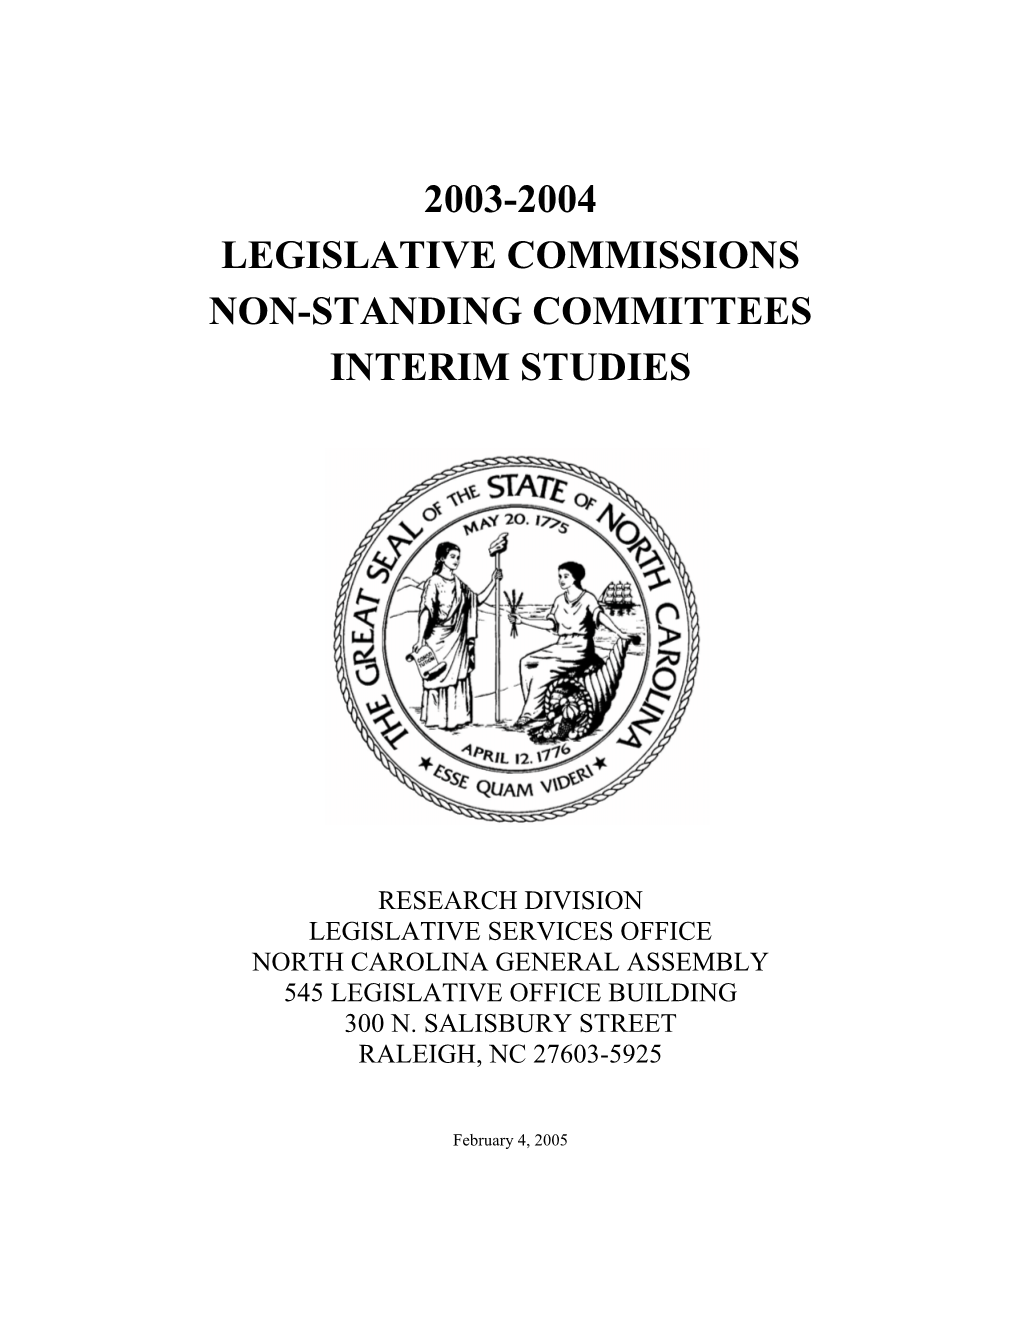 2003-2004 Legislative Commissions Non-Standing Committees Interim Studies